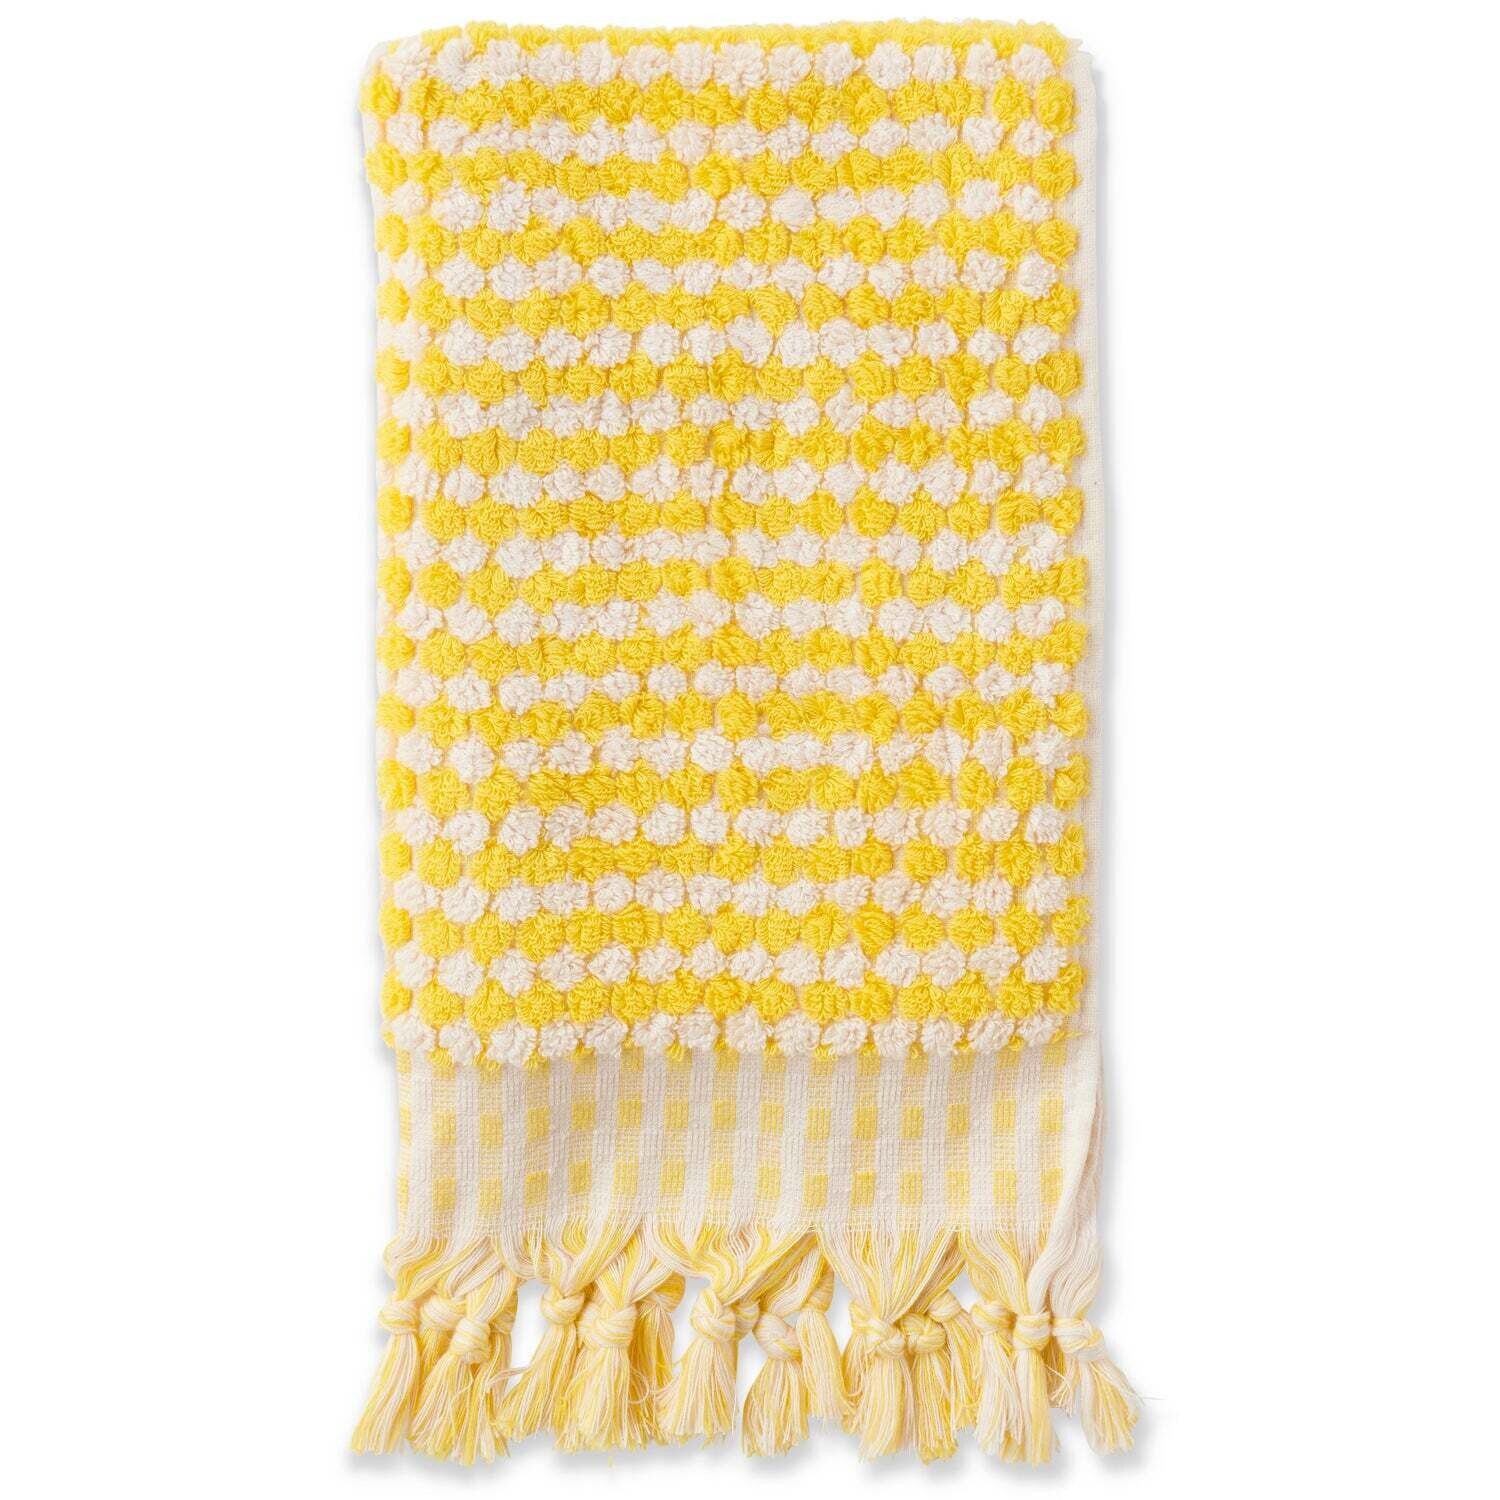 Turkish Towels - Hand Towel - Lemon Drops